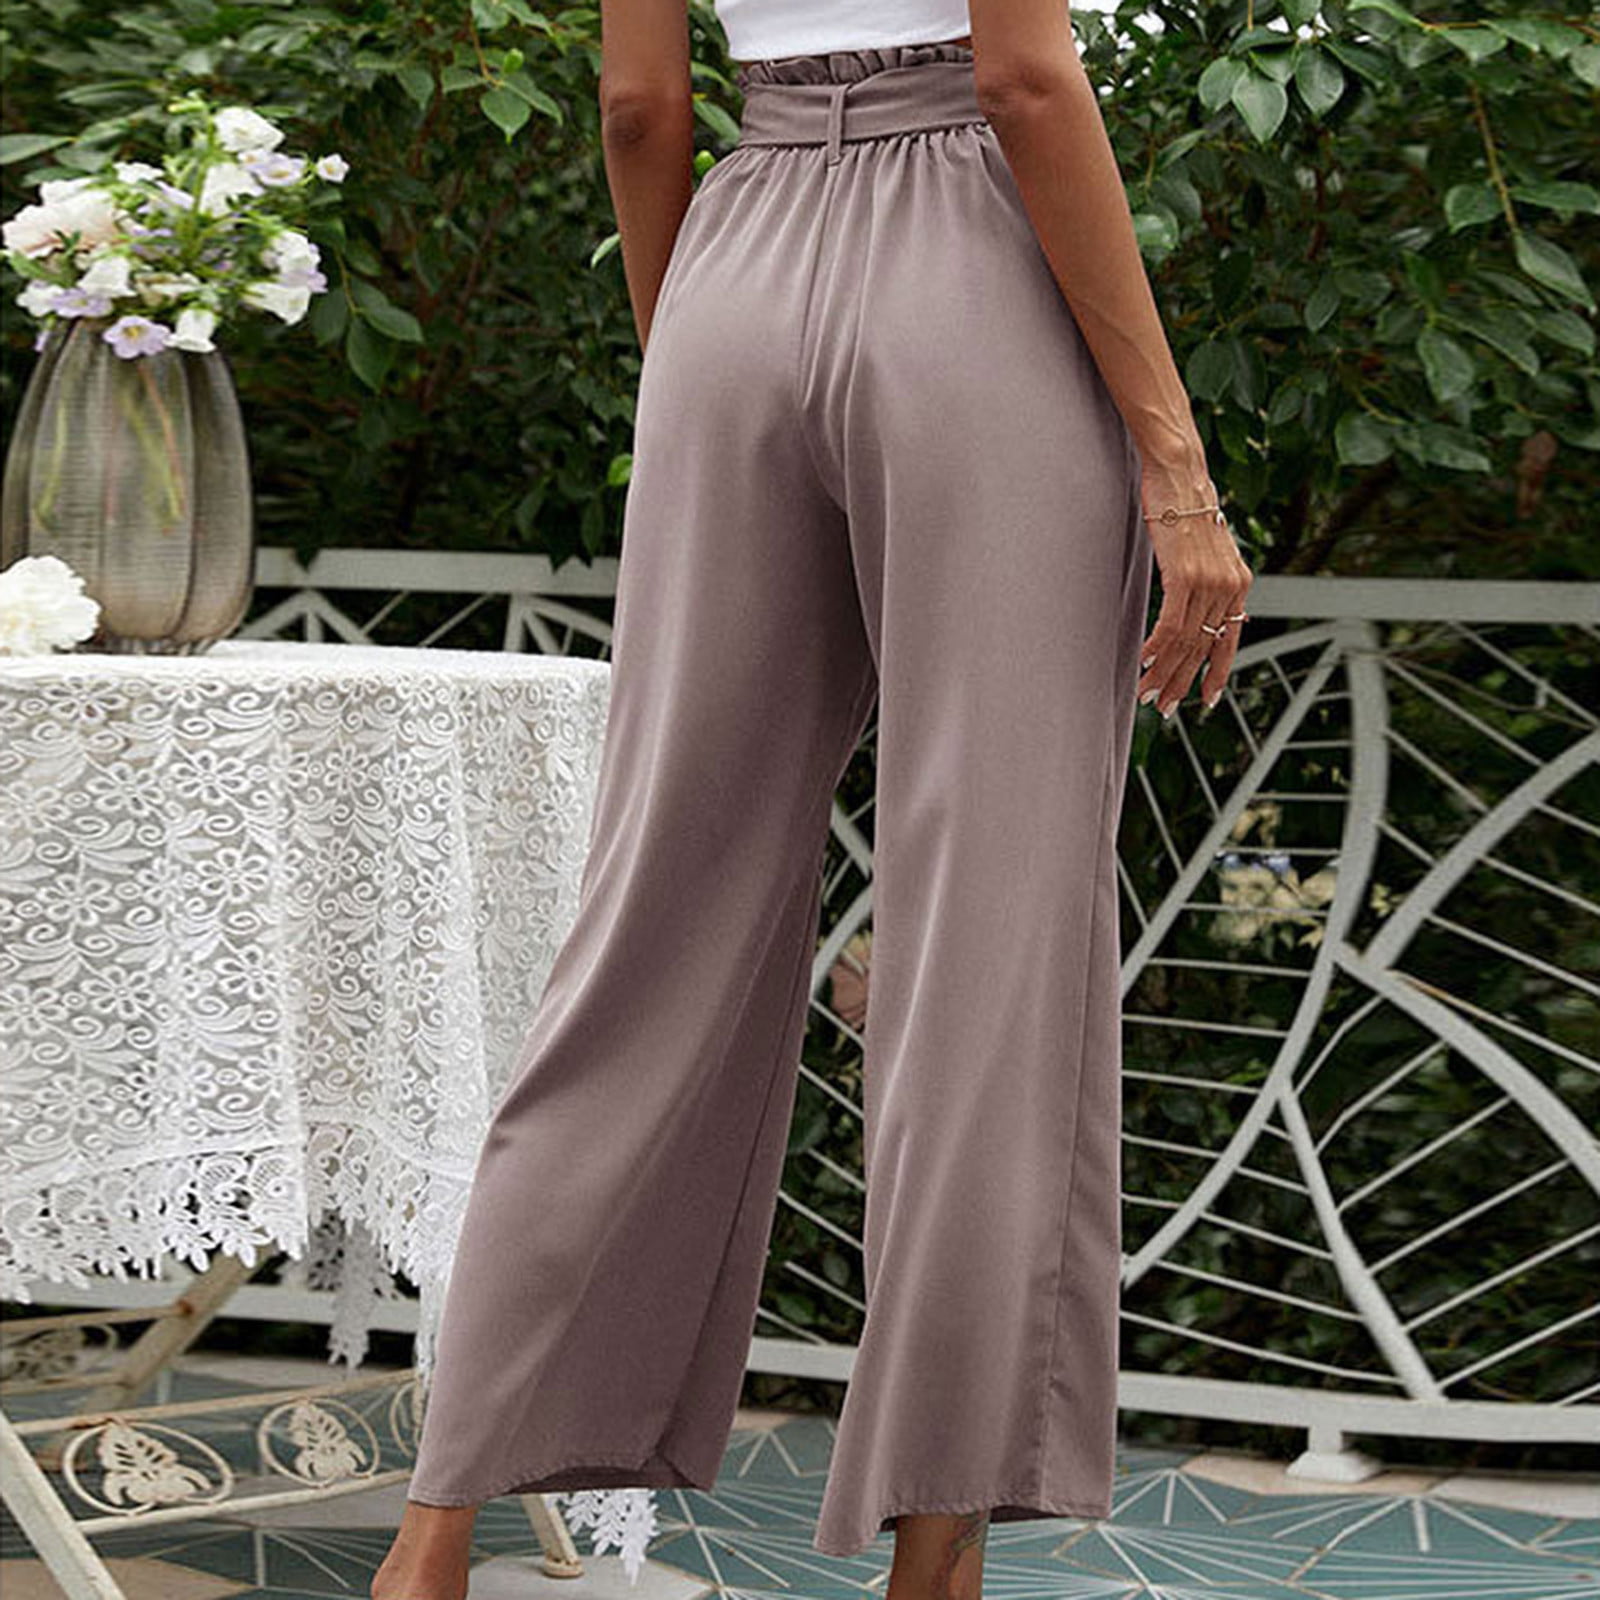 LEIGE Ankle-Length Pants Pockets Female Harem Jeans Elastic Waist Baggy  Patchwork Streetwear Casual Vintage (Color : Photo Color, Size : L Code) :  Amazon.ca: Clothing, Shoes & Accessories